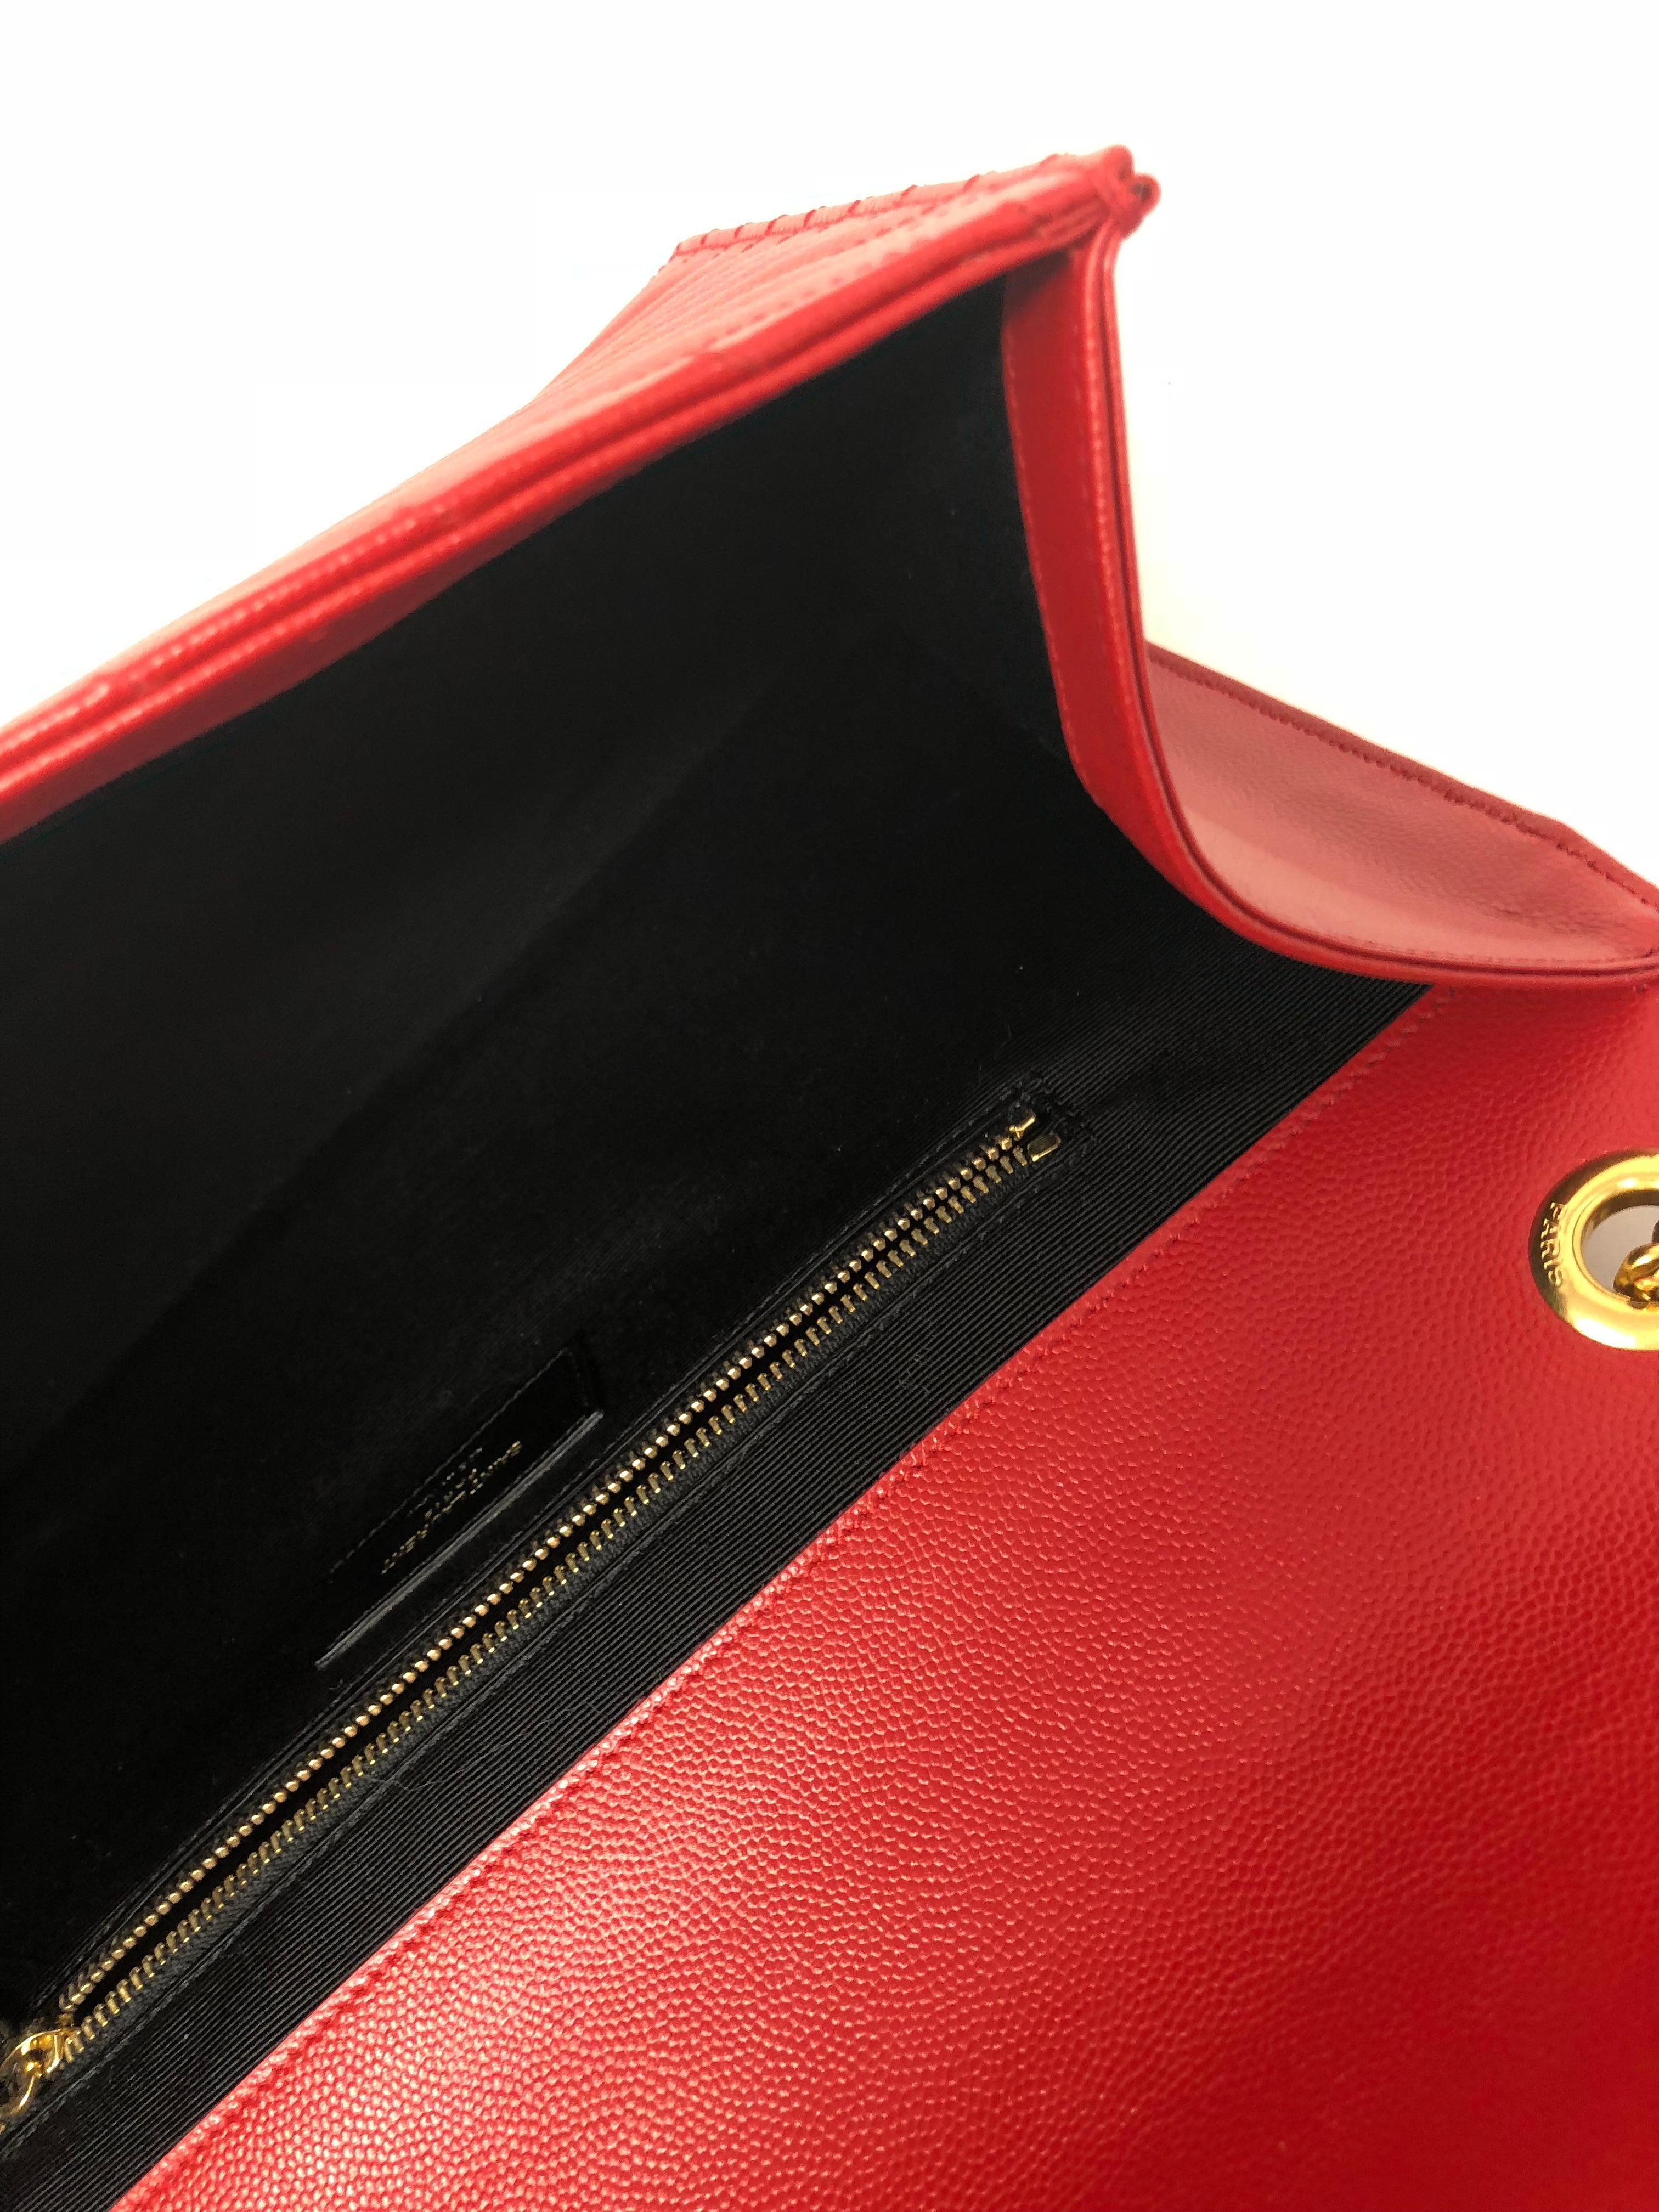 Women's or Men's YSL Red Leather Large Matelasse Chain Shoulder Bag